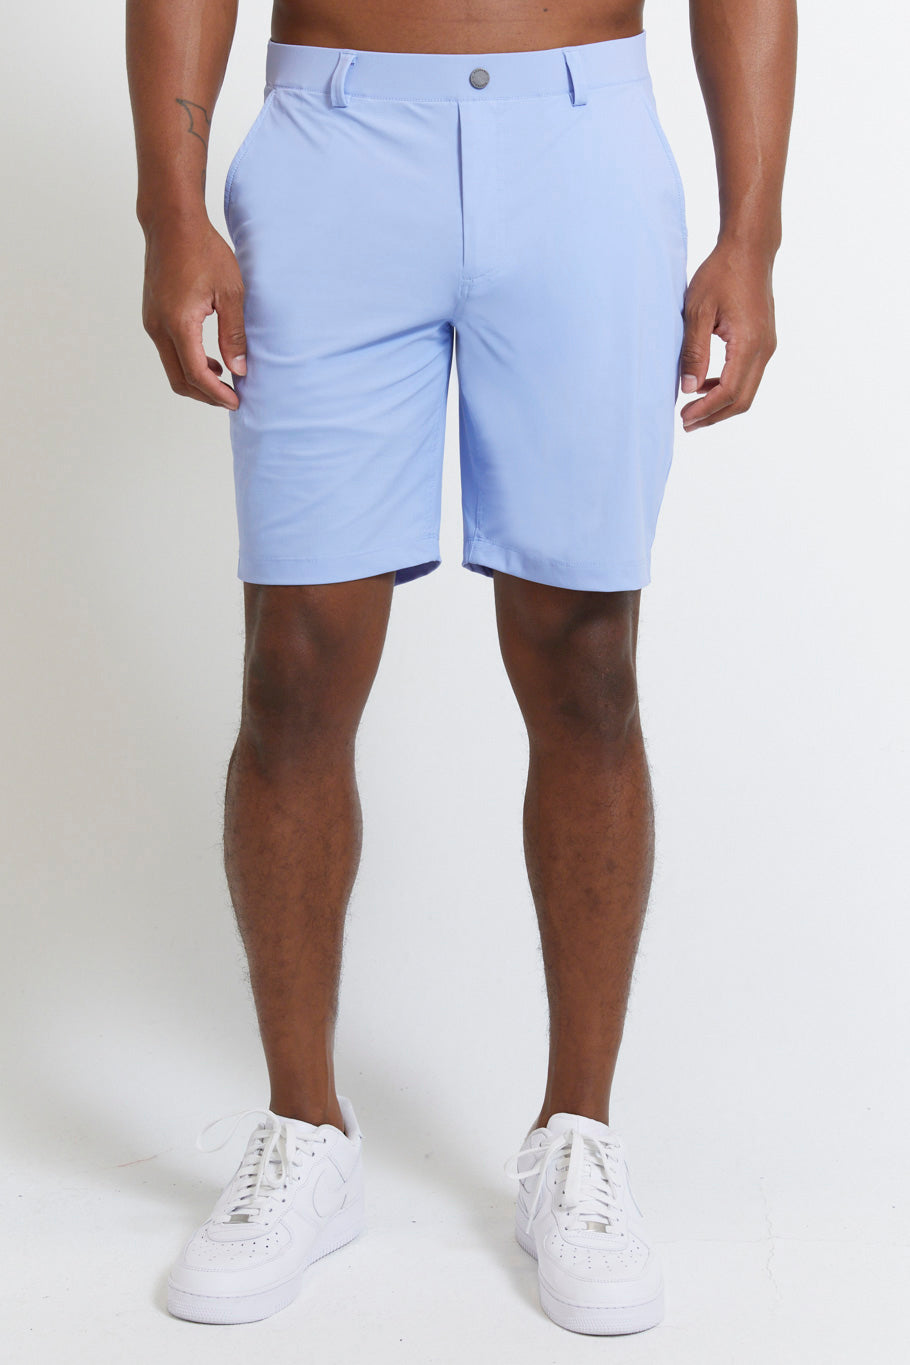 All in Motion Activewear Shorts Men's Large L Blue Pockets Elastic